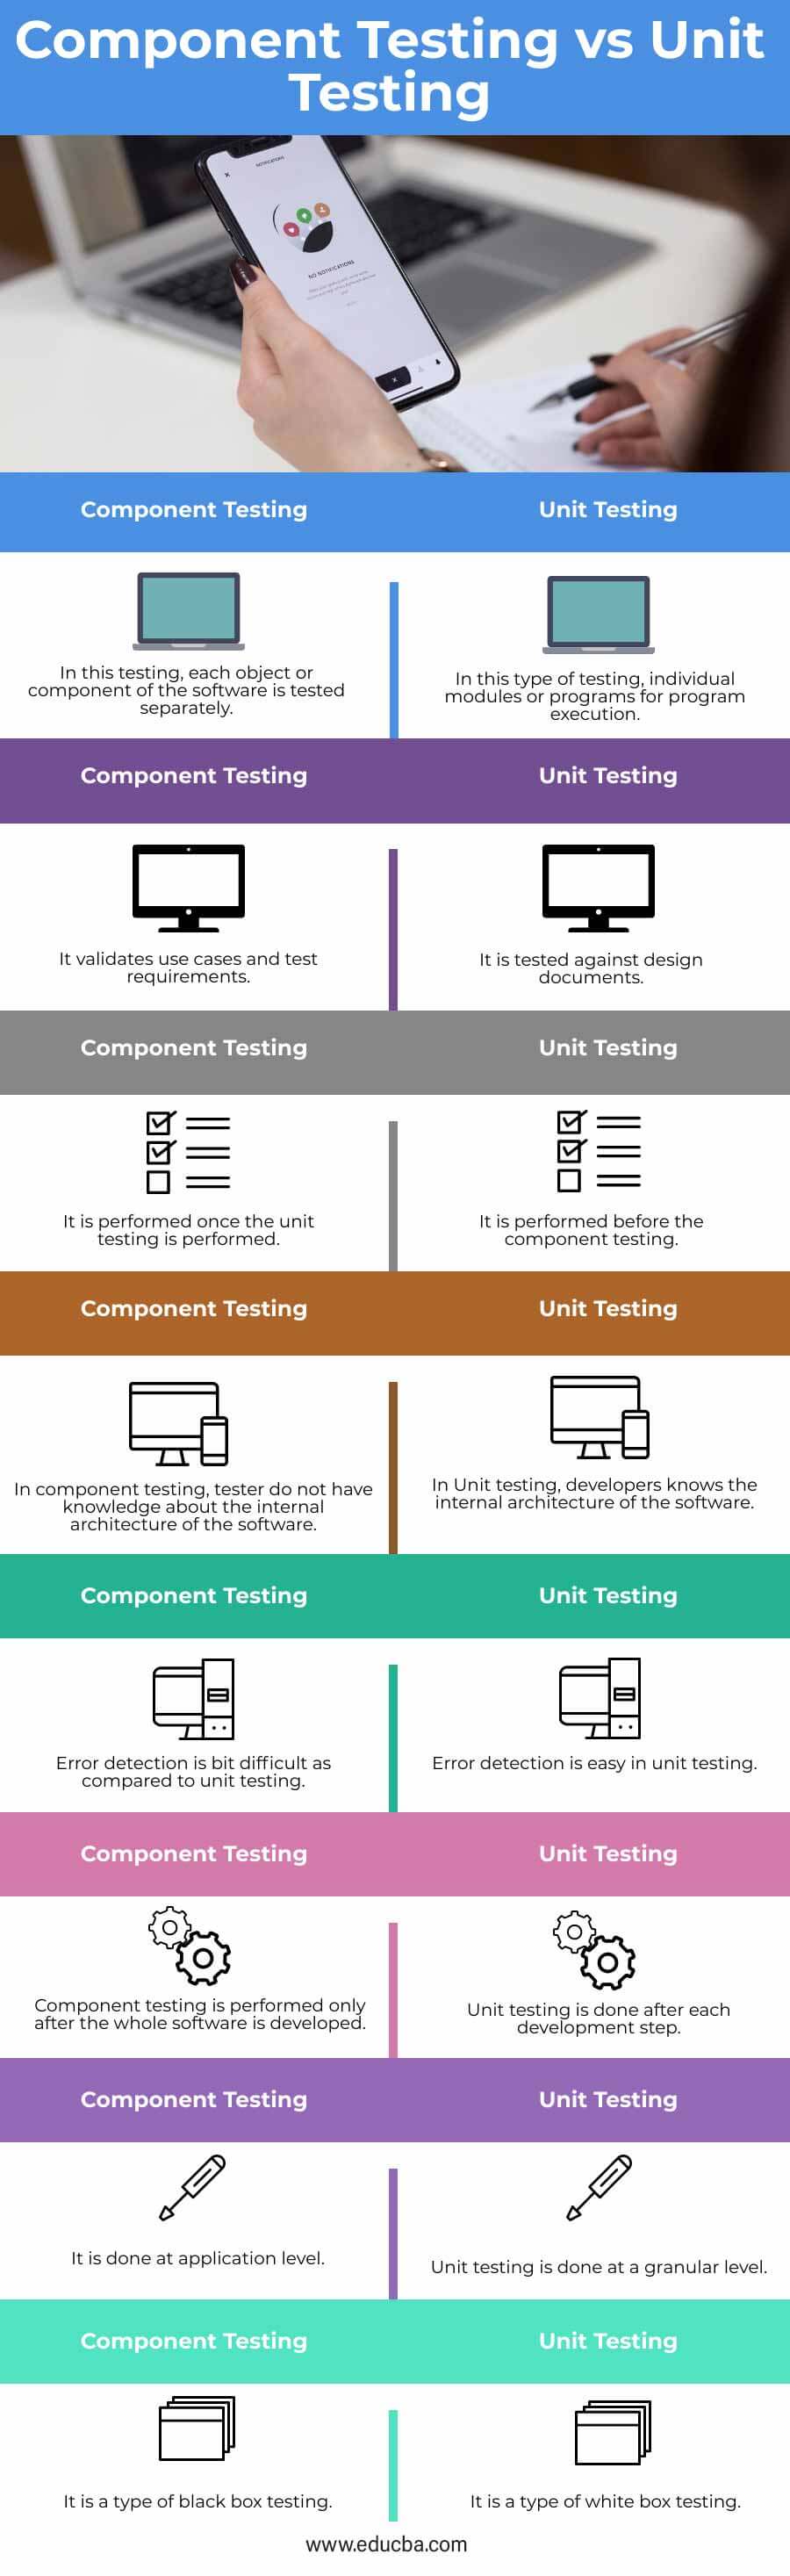 Component-Testing-vs-Unit-Testing-info